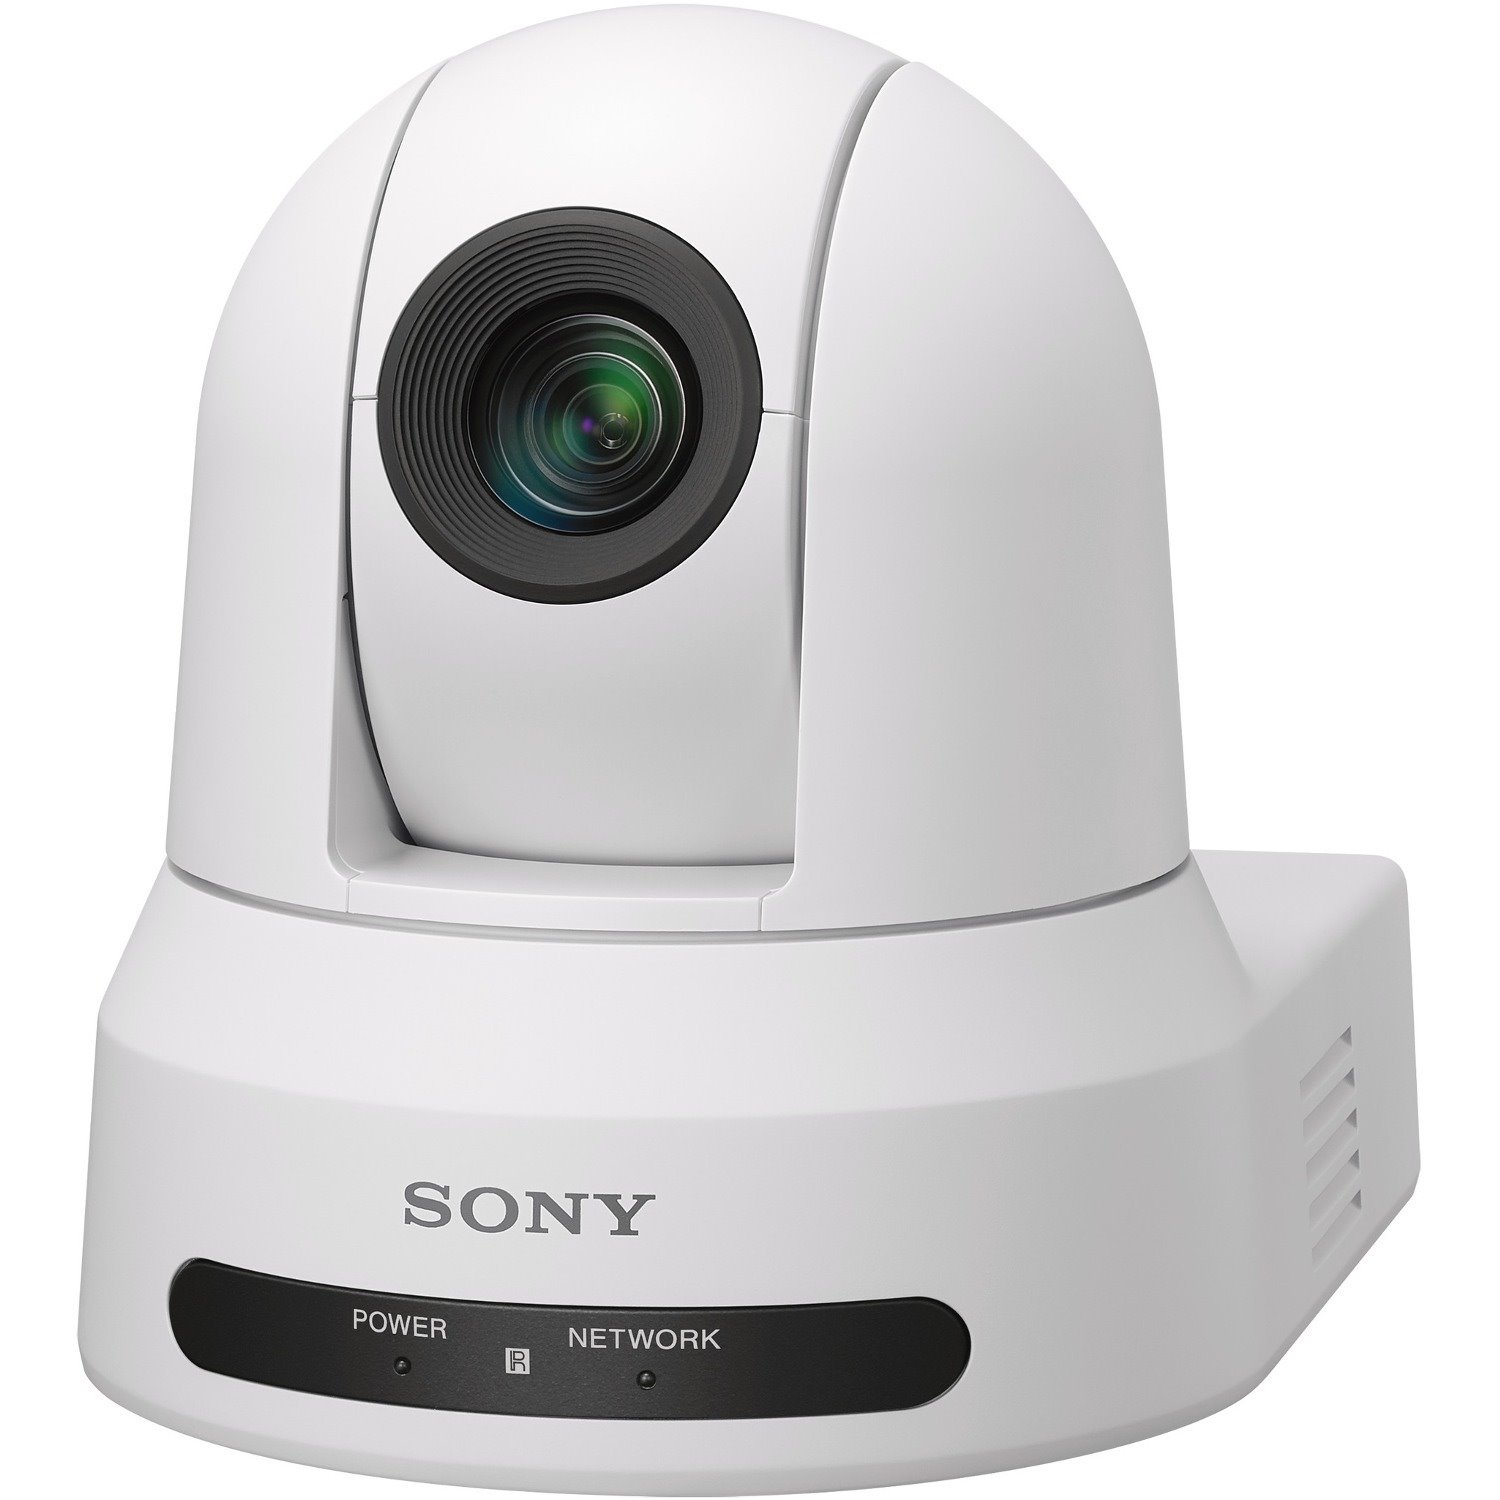 Sony Pro SRG-X120 8.5 Megapixel HD Network Camera - White